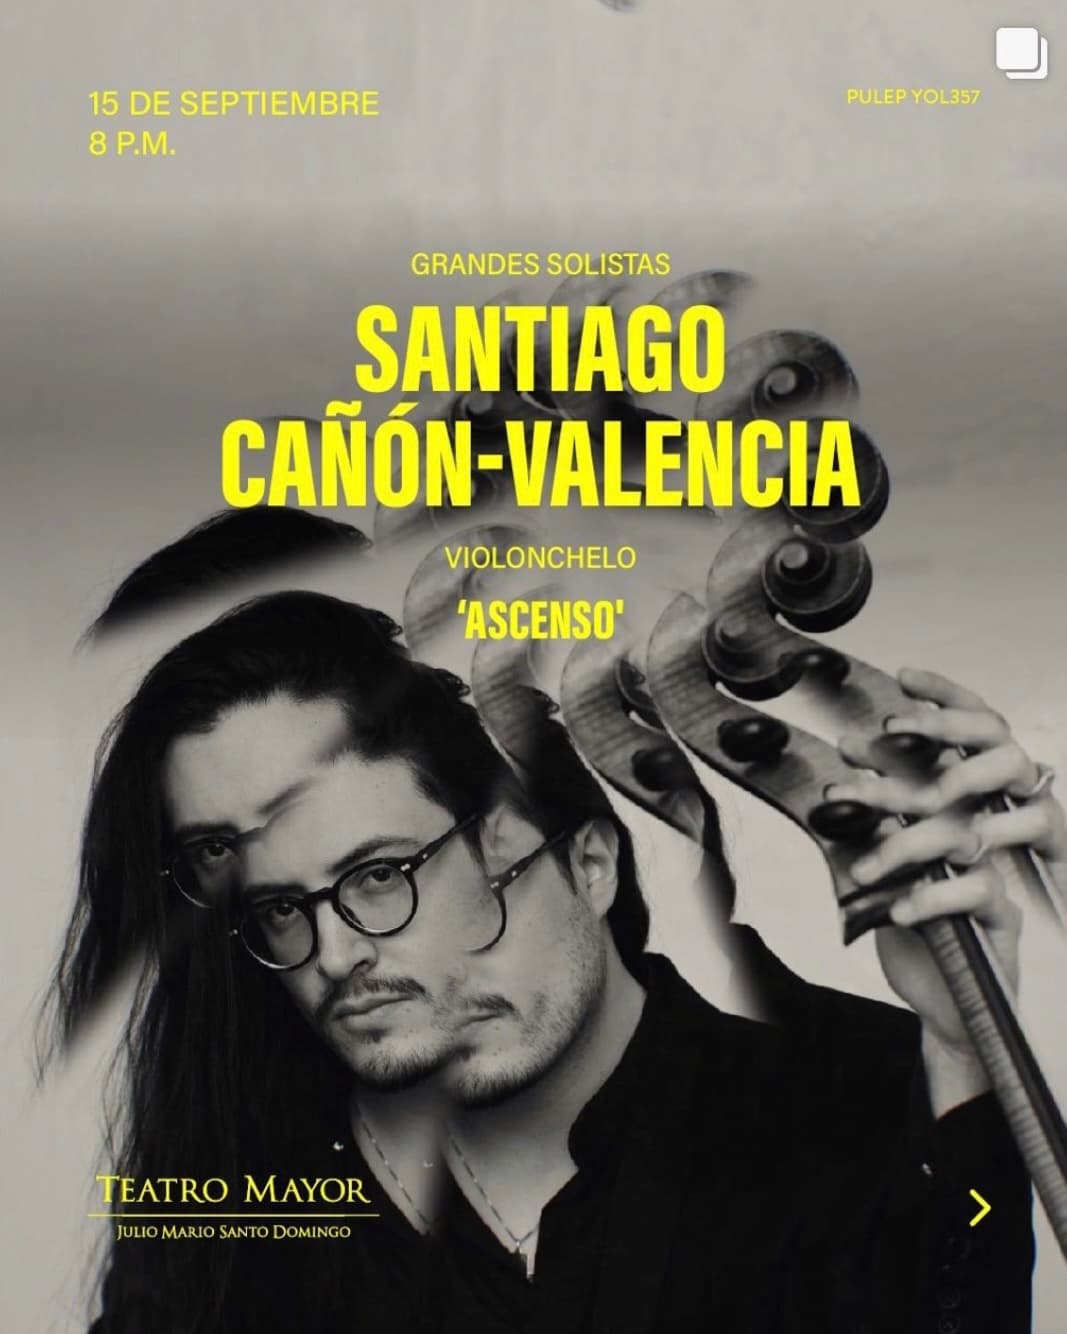 advertisement of Santiago Cañon-Valencia's recital